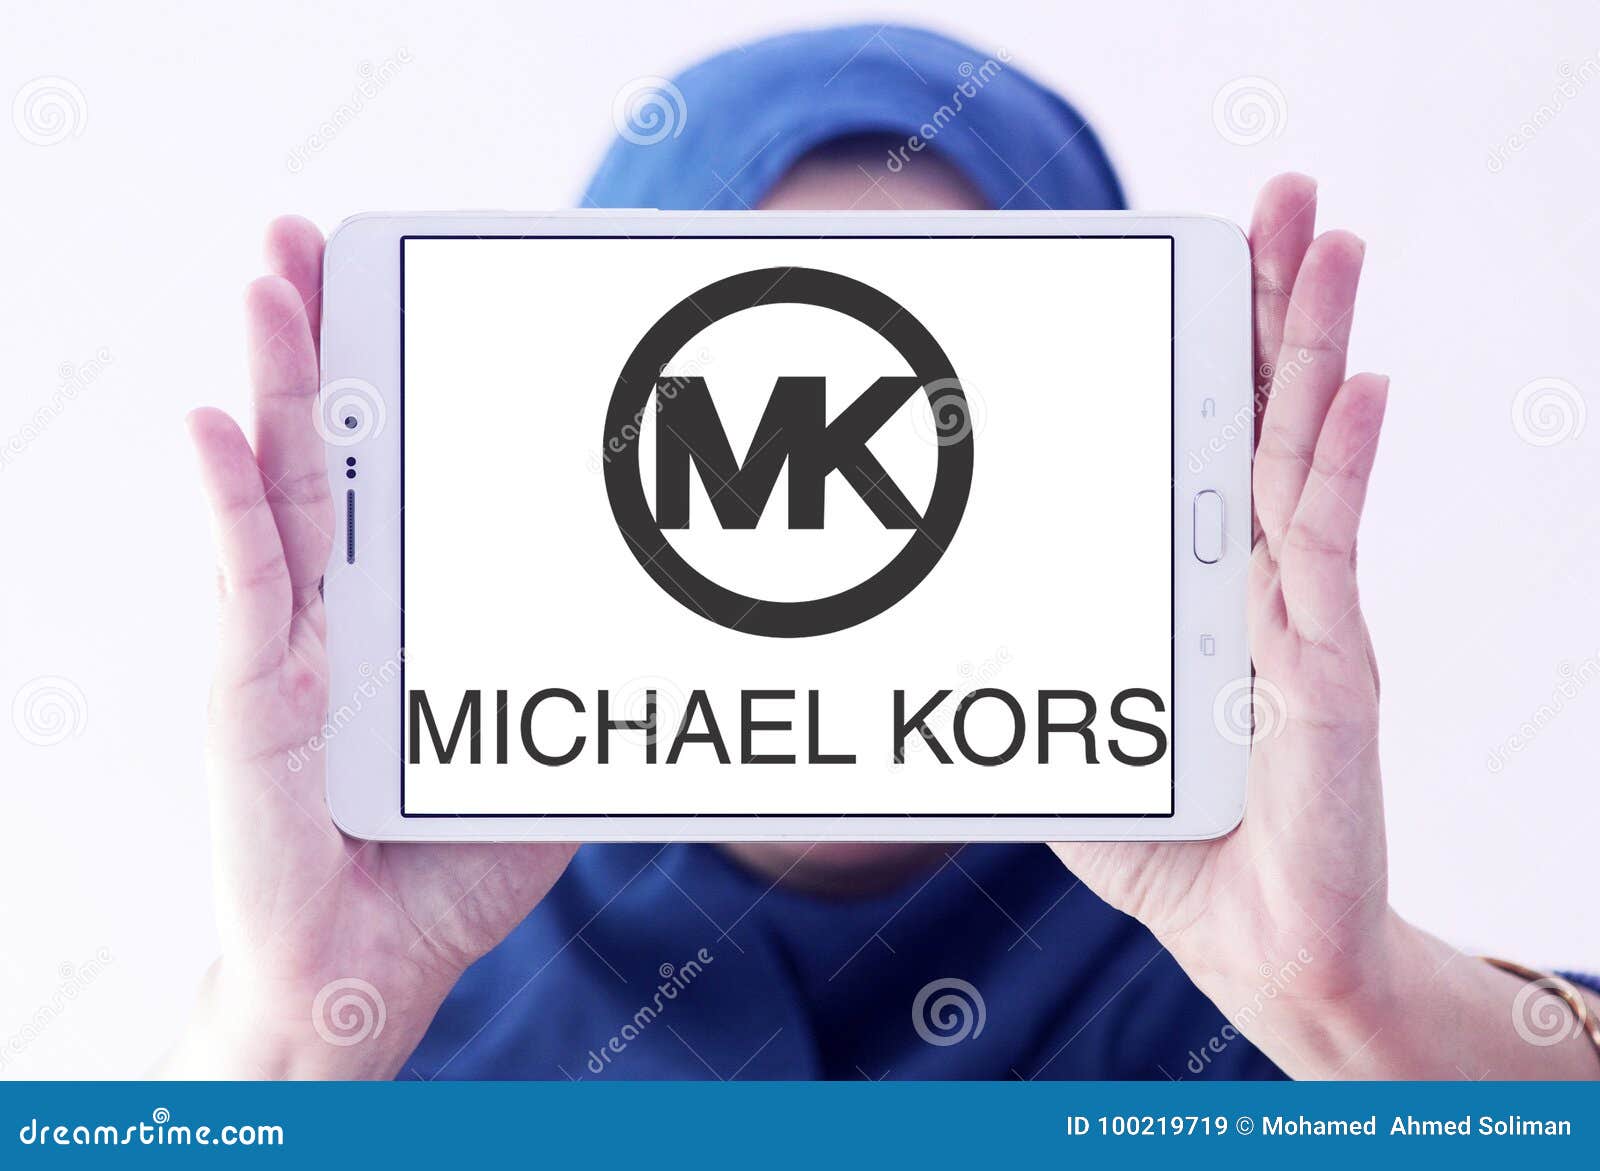 Michael Kors logo stock image. Image of 100219719